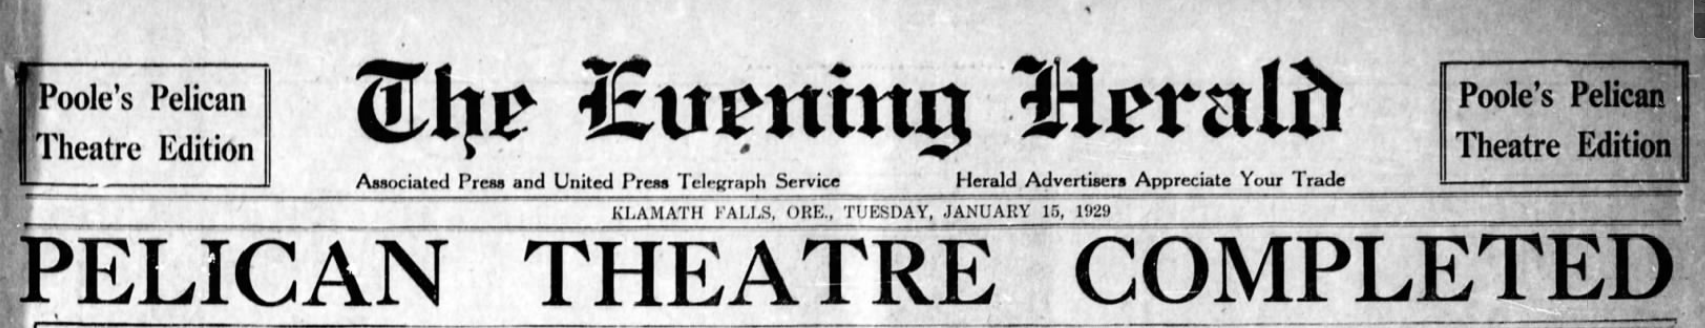 Poole's Pelican theater special edition Evening Herald headline, 1929